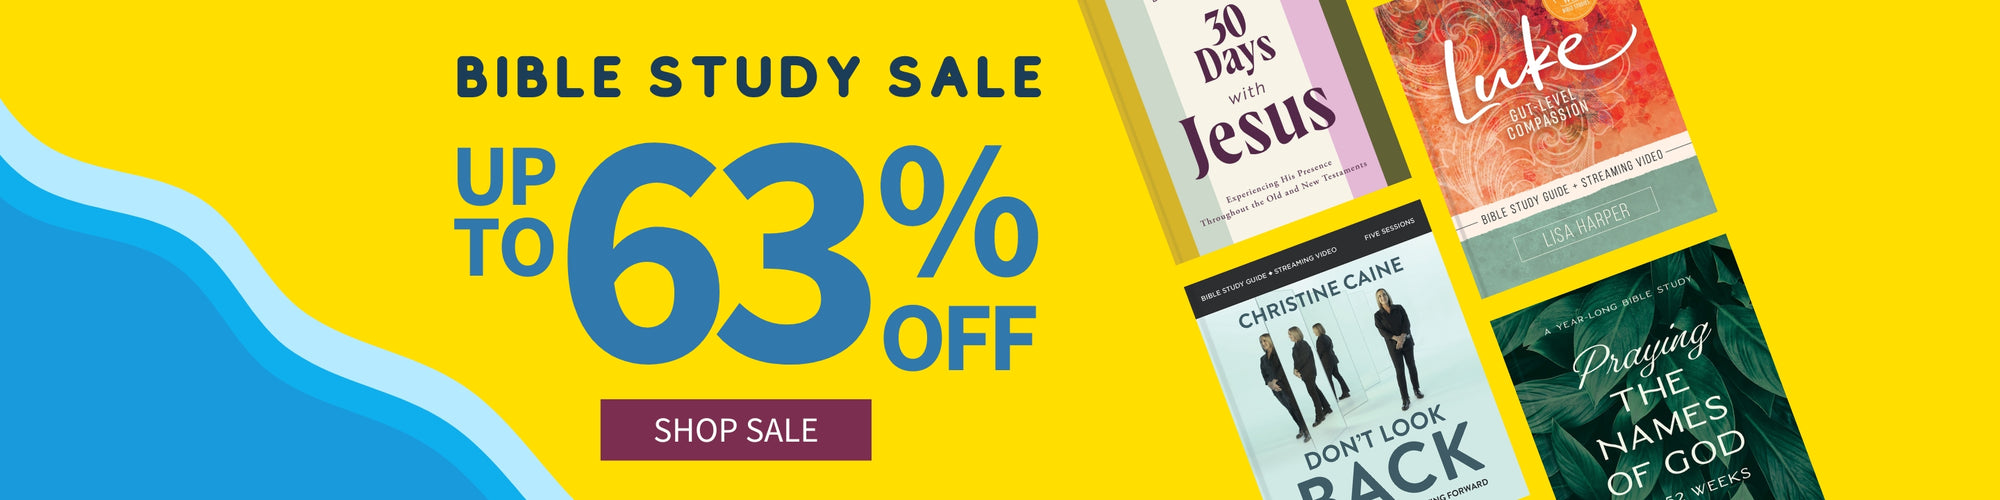 Bible Study Sale up to 63% Shop Sale